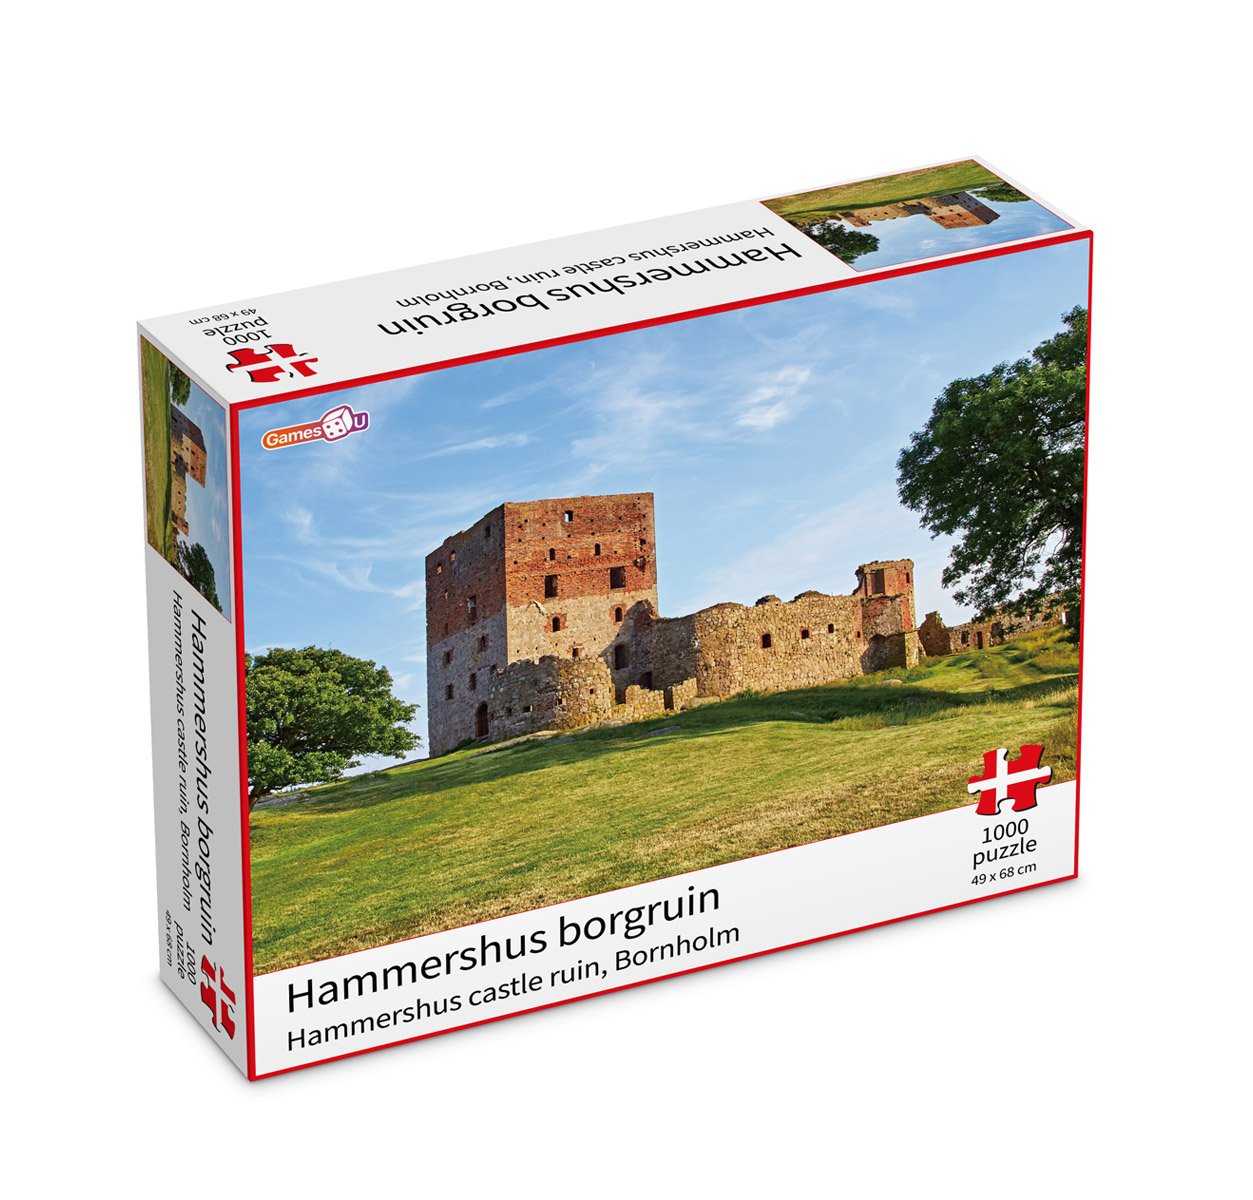 Denmark Puzzle - Hammershus castle ruin (I-1400112)